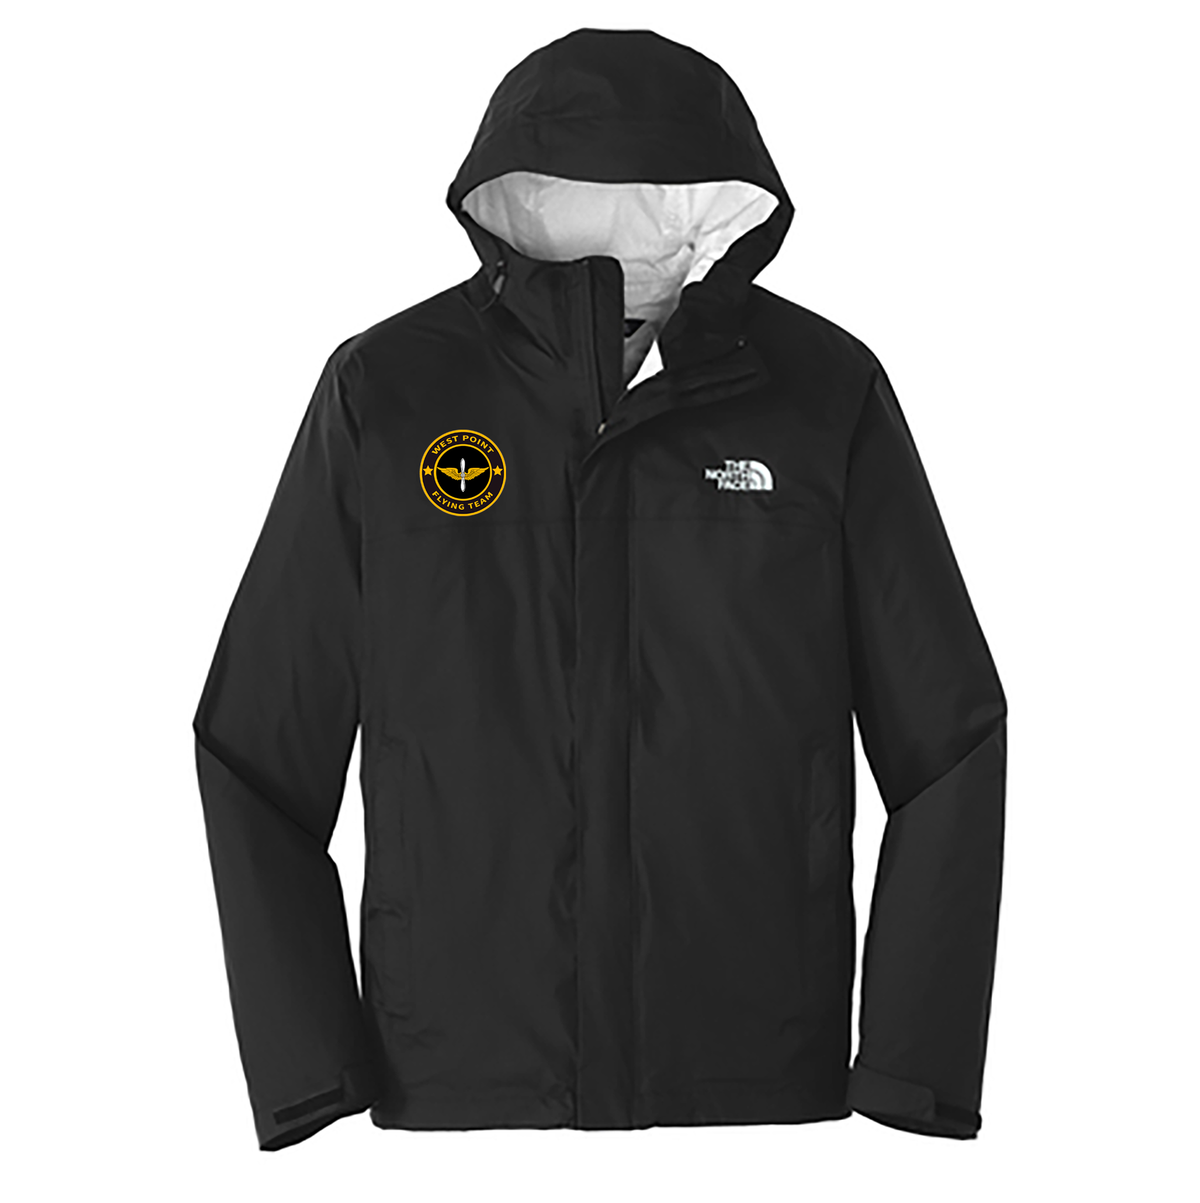 West Point Flight Team The North Face® DryVent™ Rain Jacket